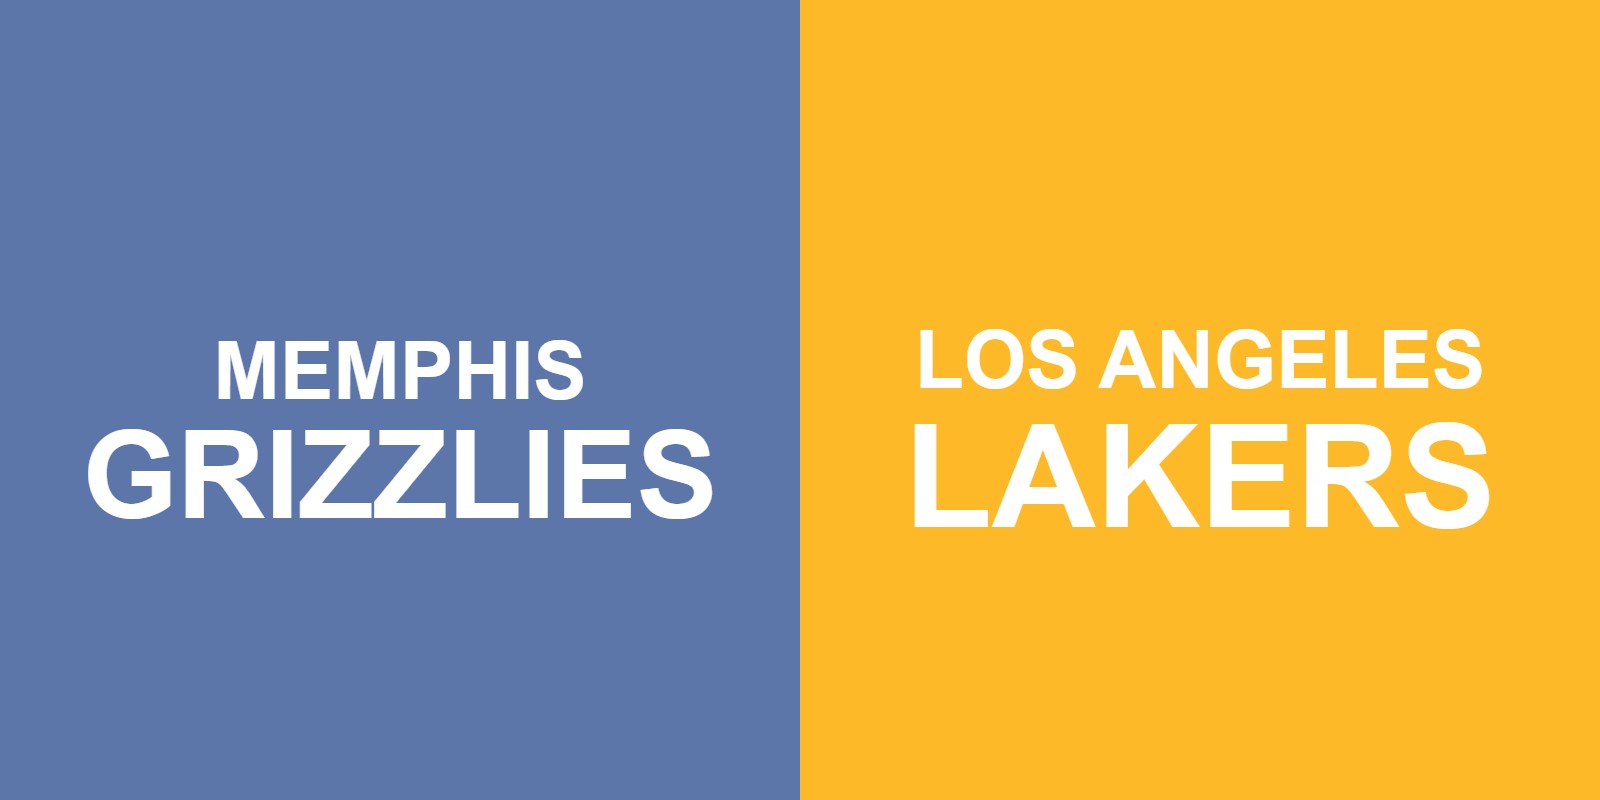 Grizzlies vs Lakers